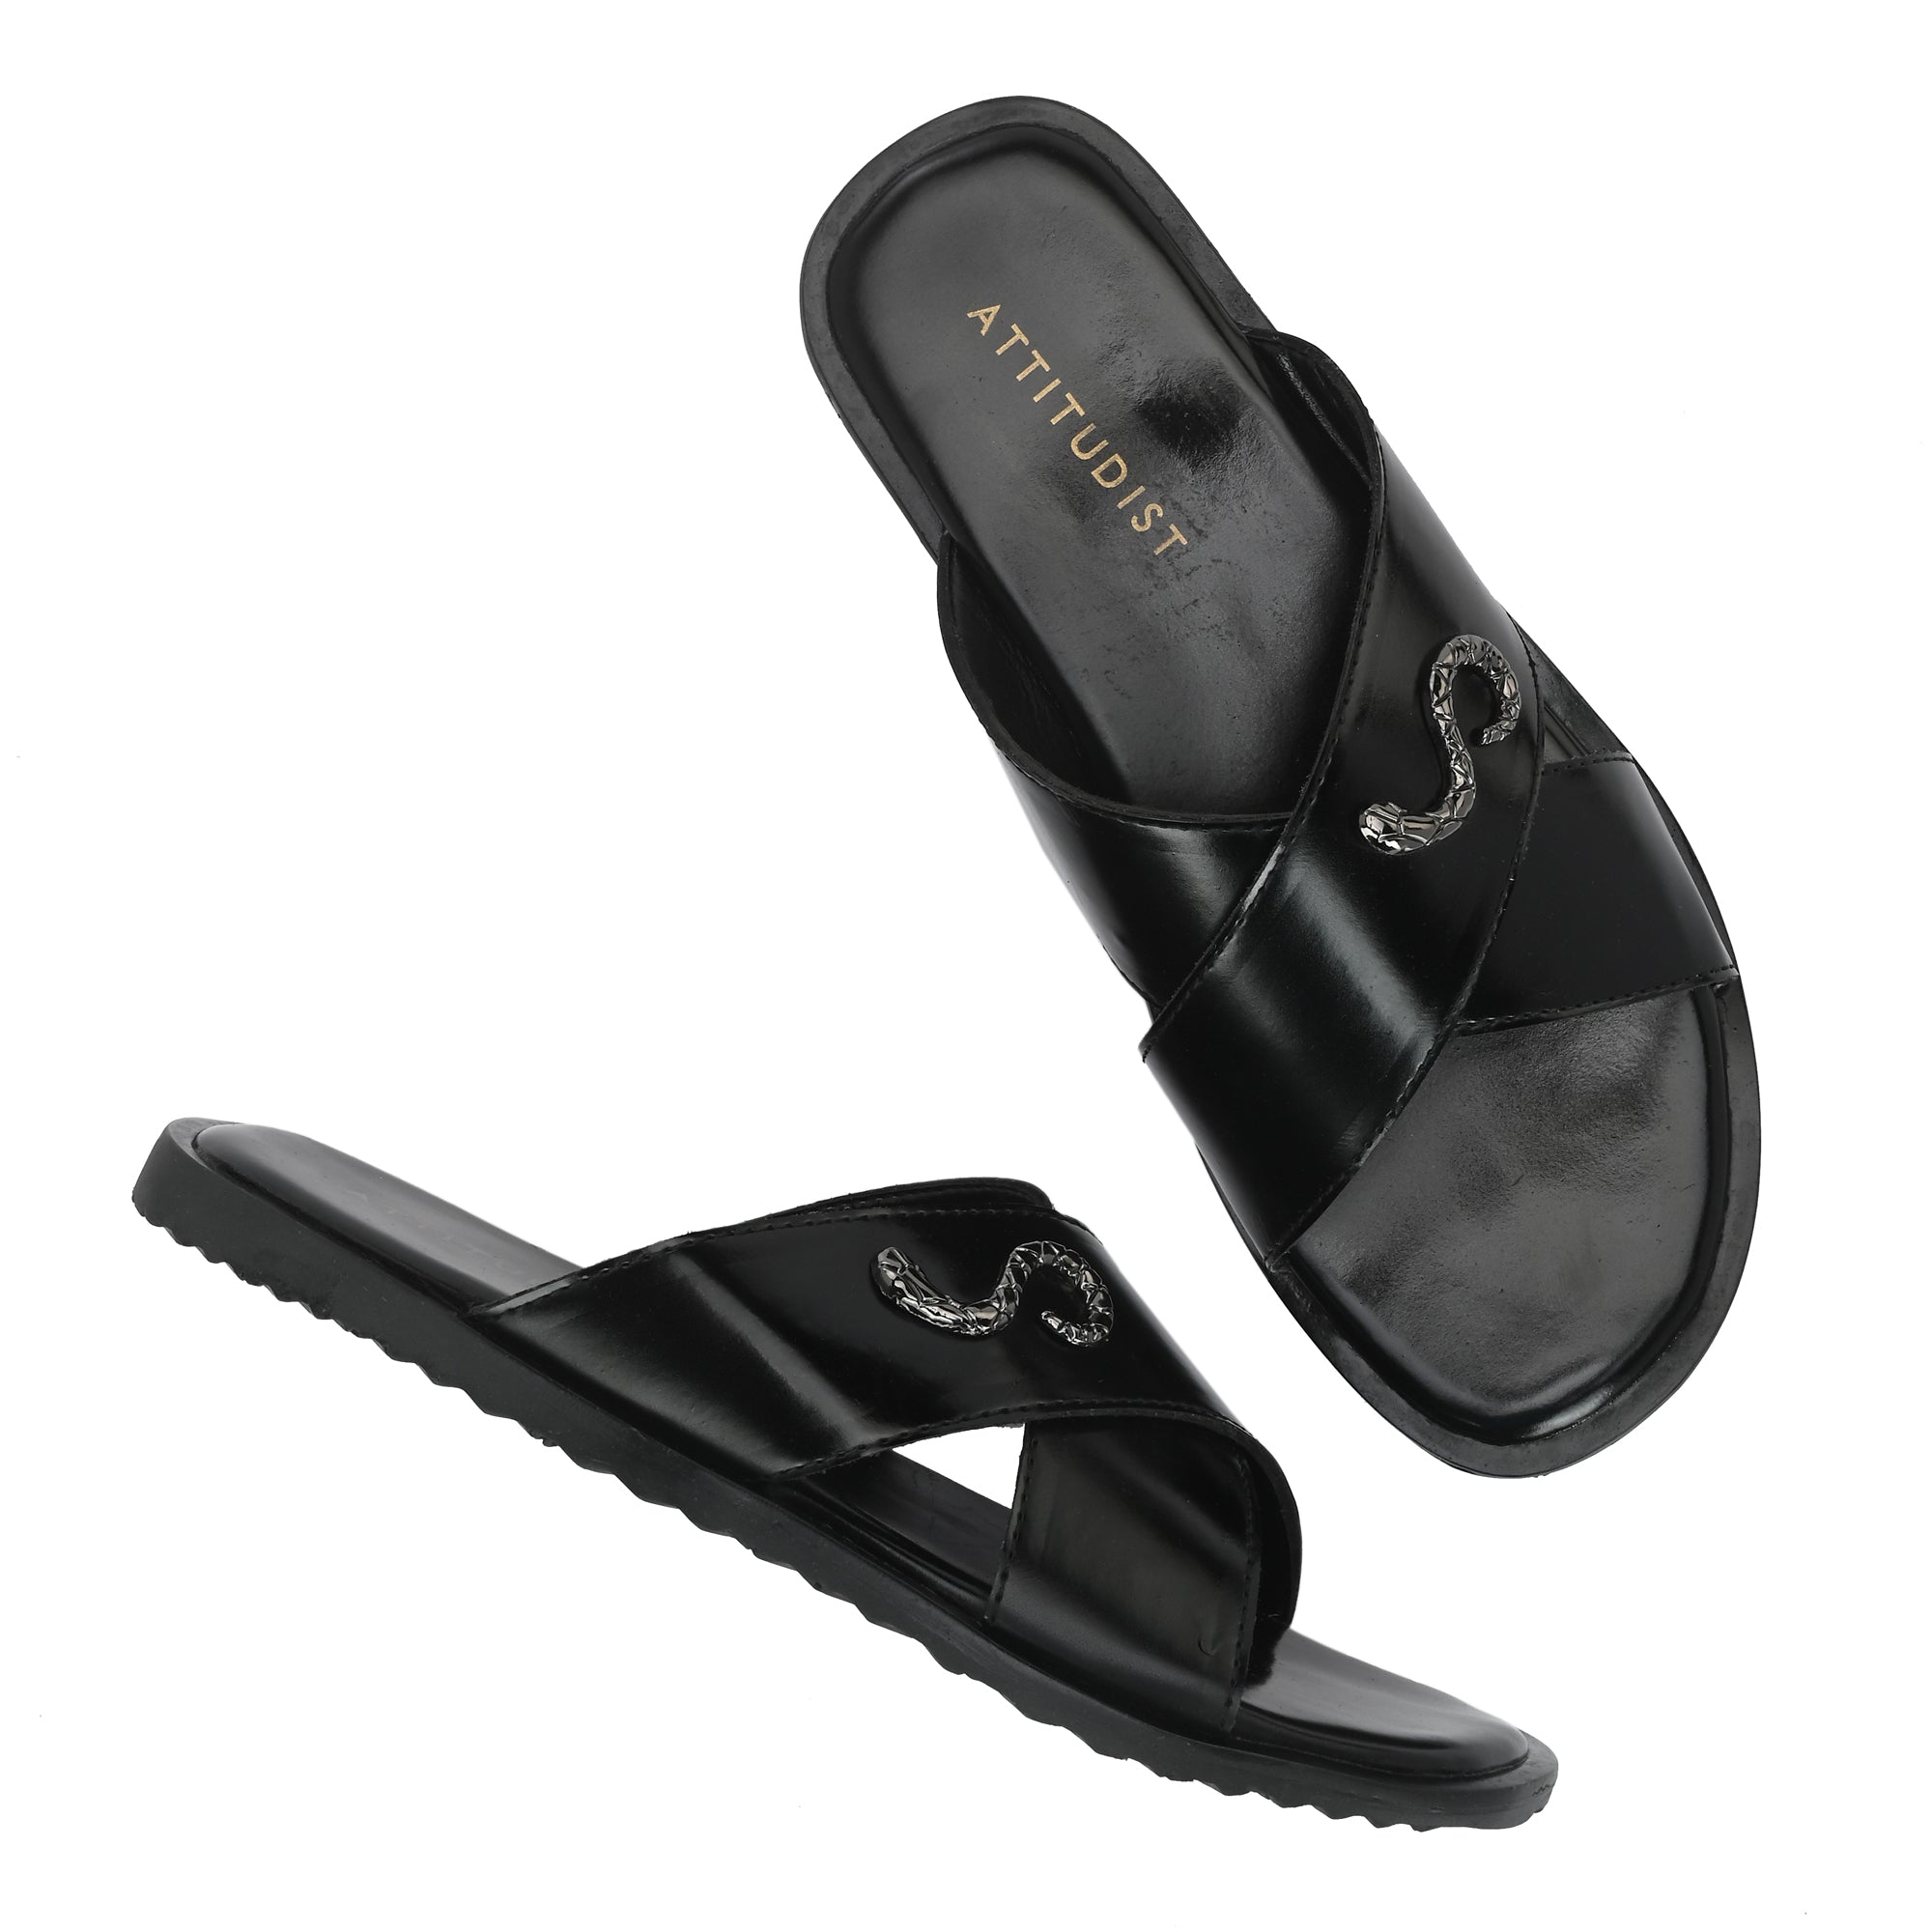 attitudist-black-cross-over-slippers-for-men-silver-side-brooch